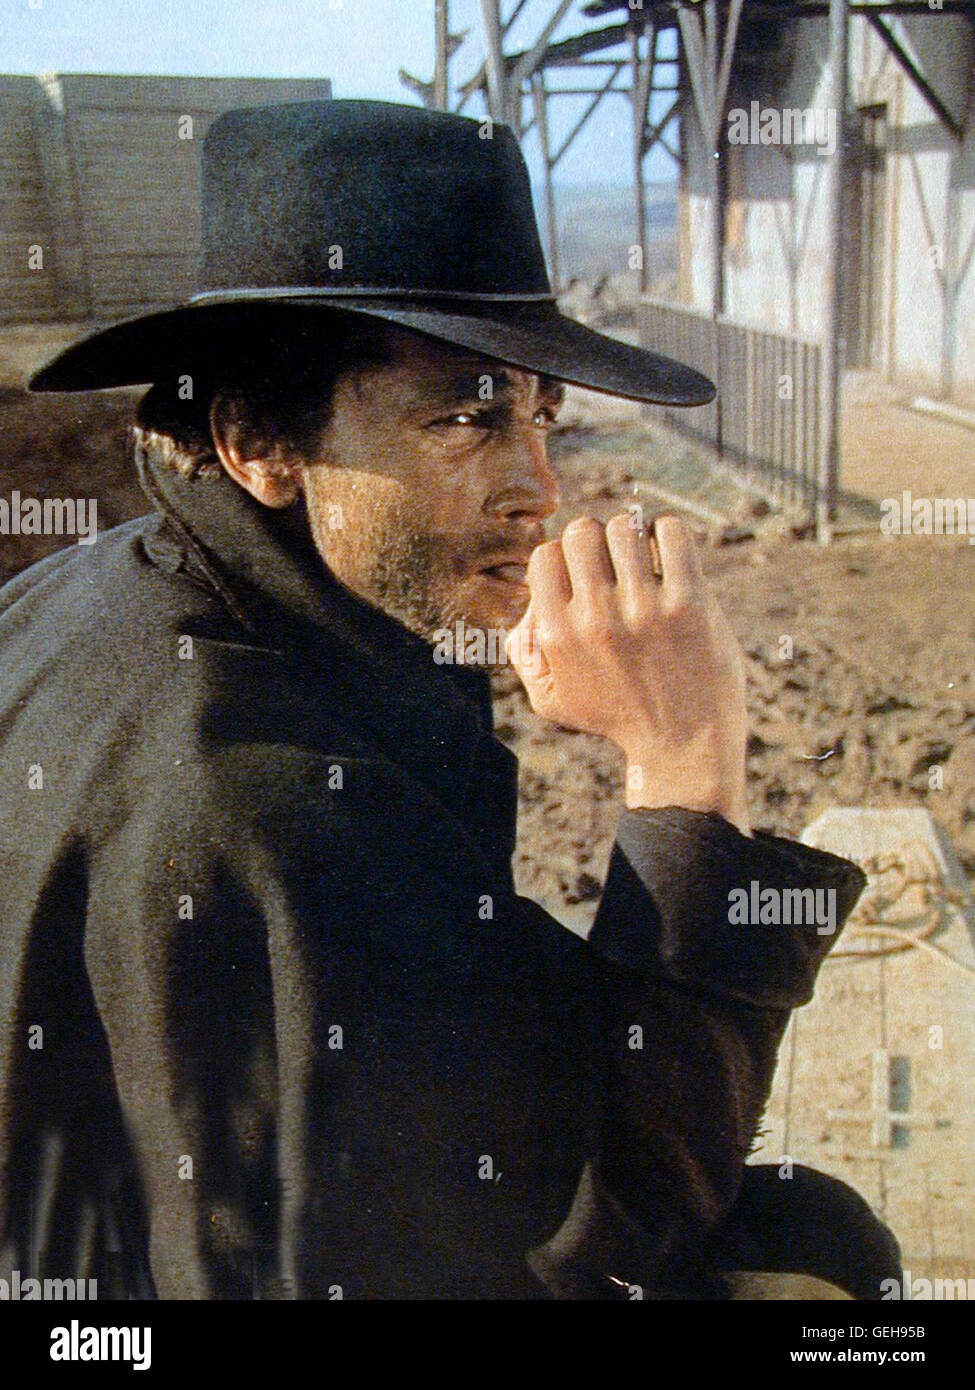 Franco Nero Django (Franco Nero) wird Kampf Gegen Die Banditen Aufnehmen  Höhle. Lokalen Caption *** 1966, 1960er, 1960er Jahre, Django, Film, Western  Django Stockfotografie - Alamy